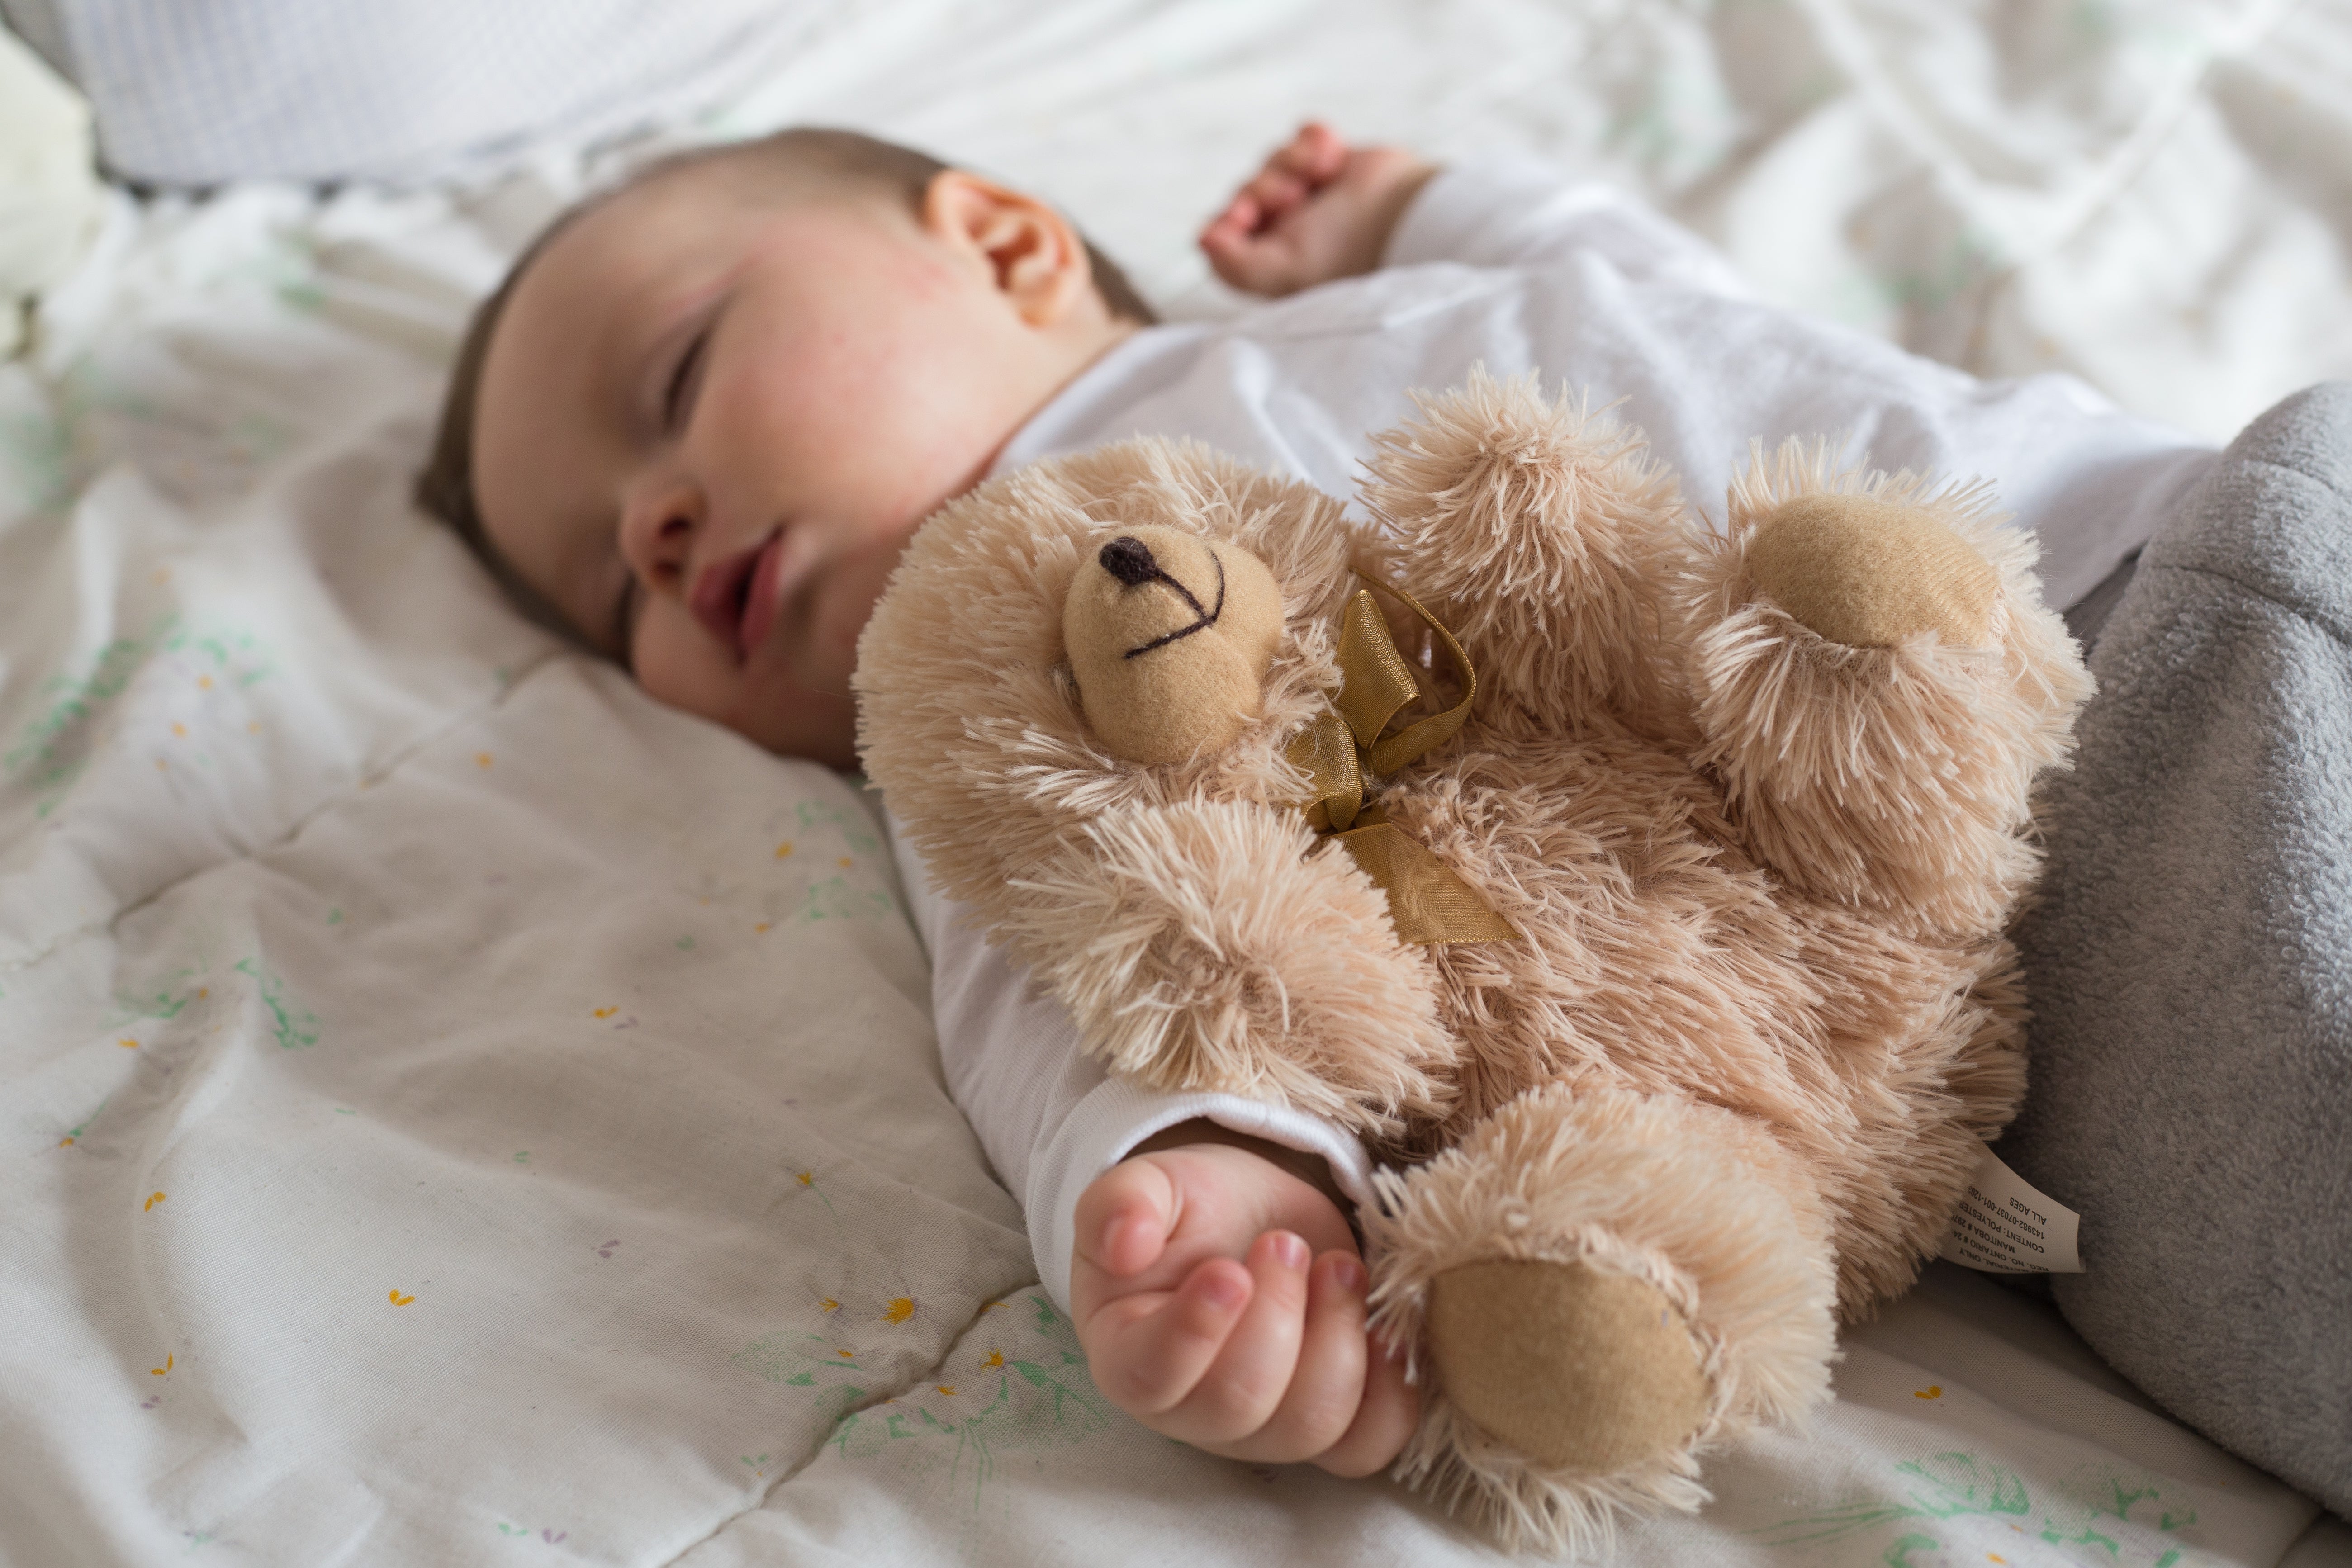 Baby sleeping with his teddy bear